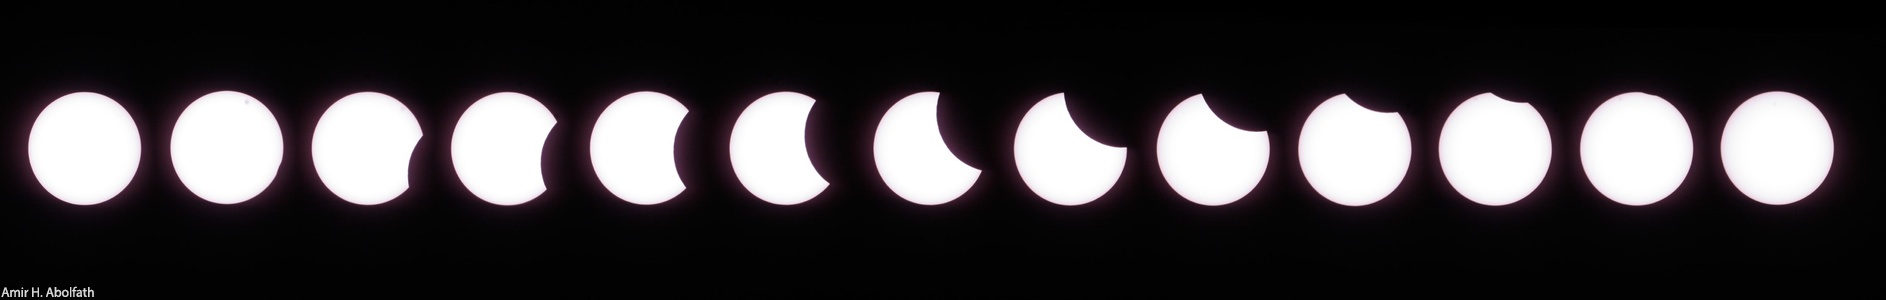 Solar eclipse 2007